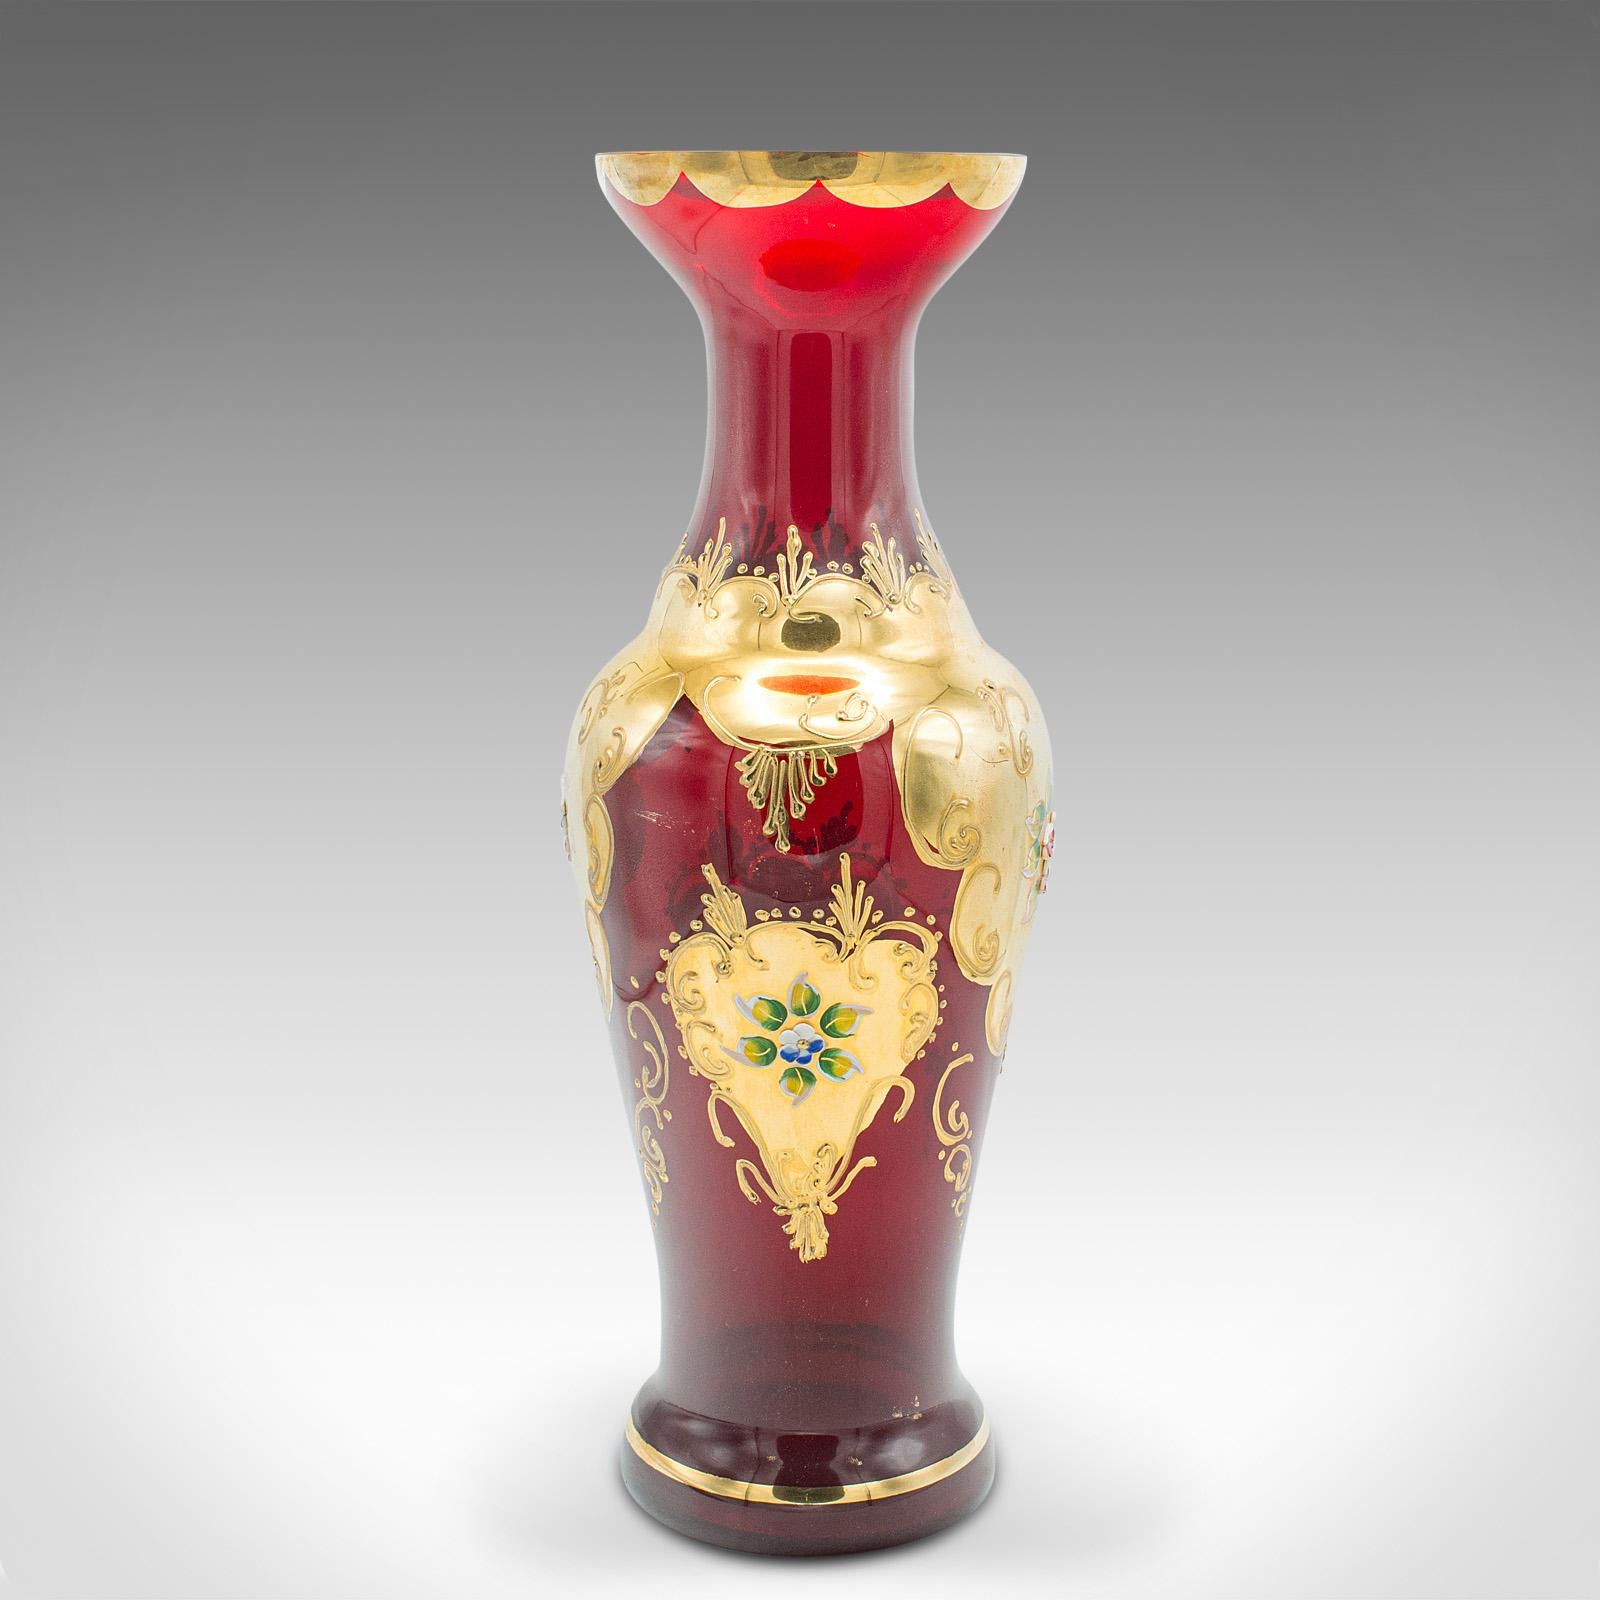 20th Century Vintage Venetian Show Vase, Italian Art Glass, Gilt, Decorative Flower Urn, 1970 For Sale